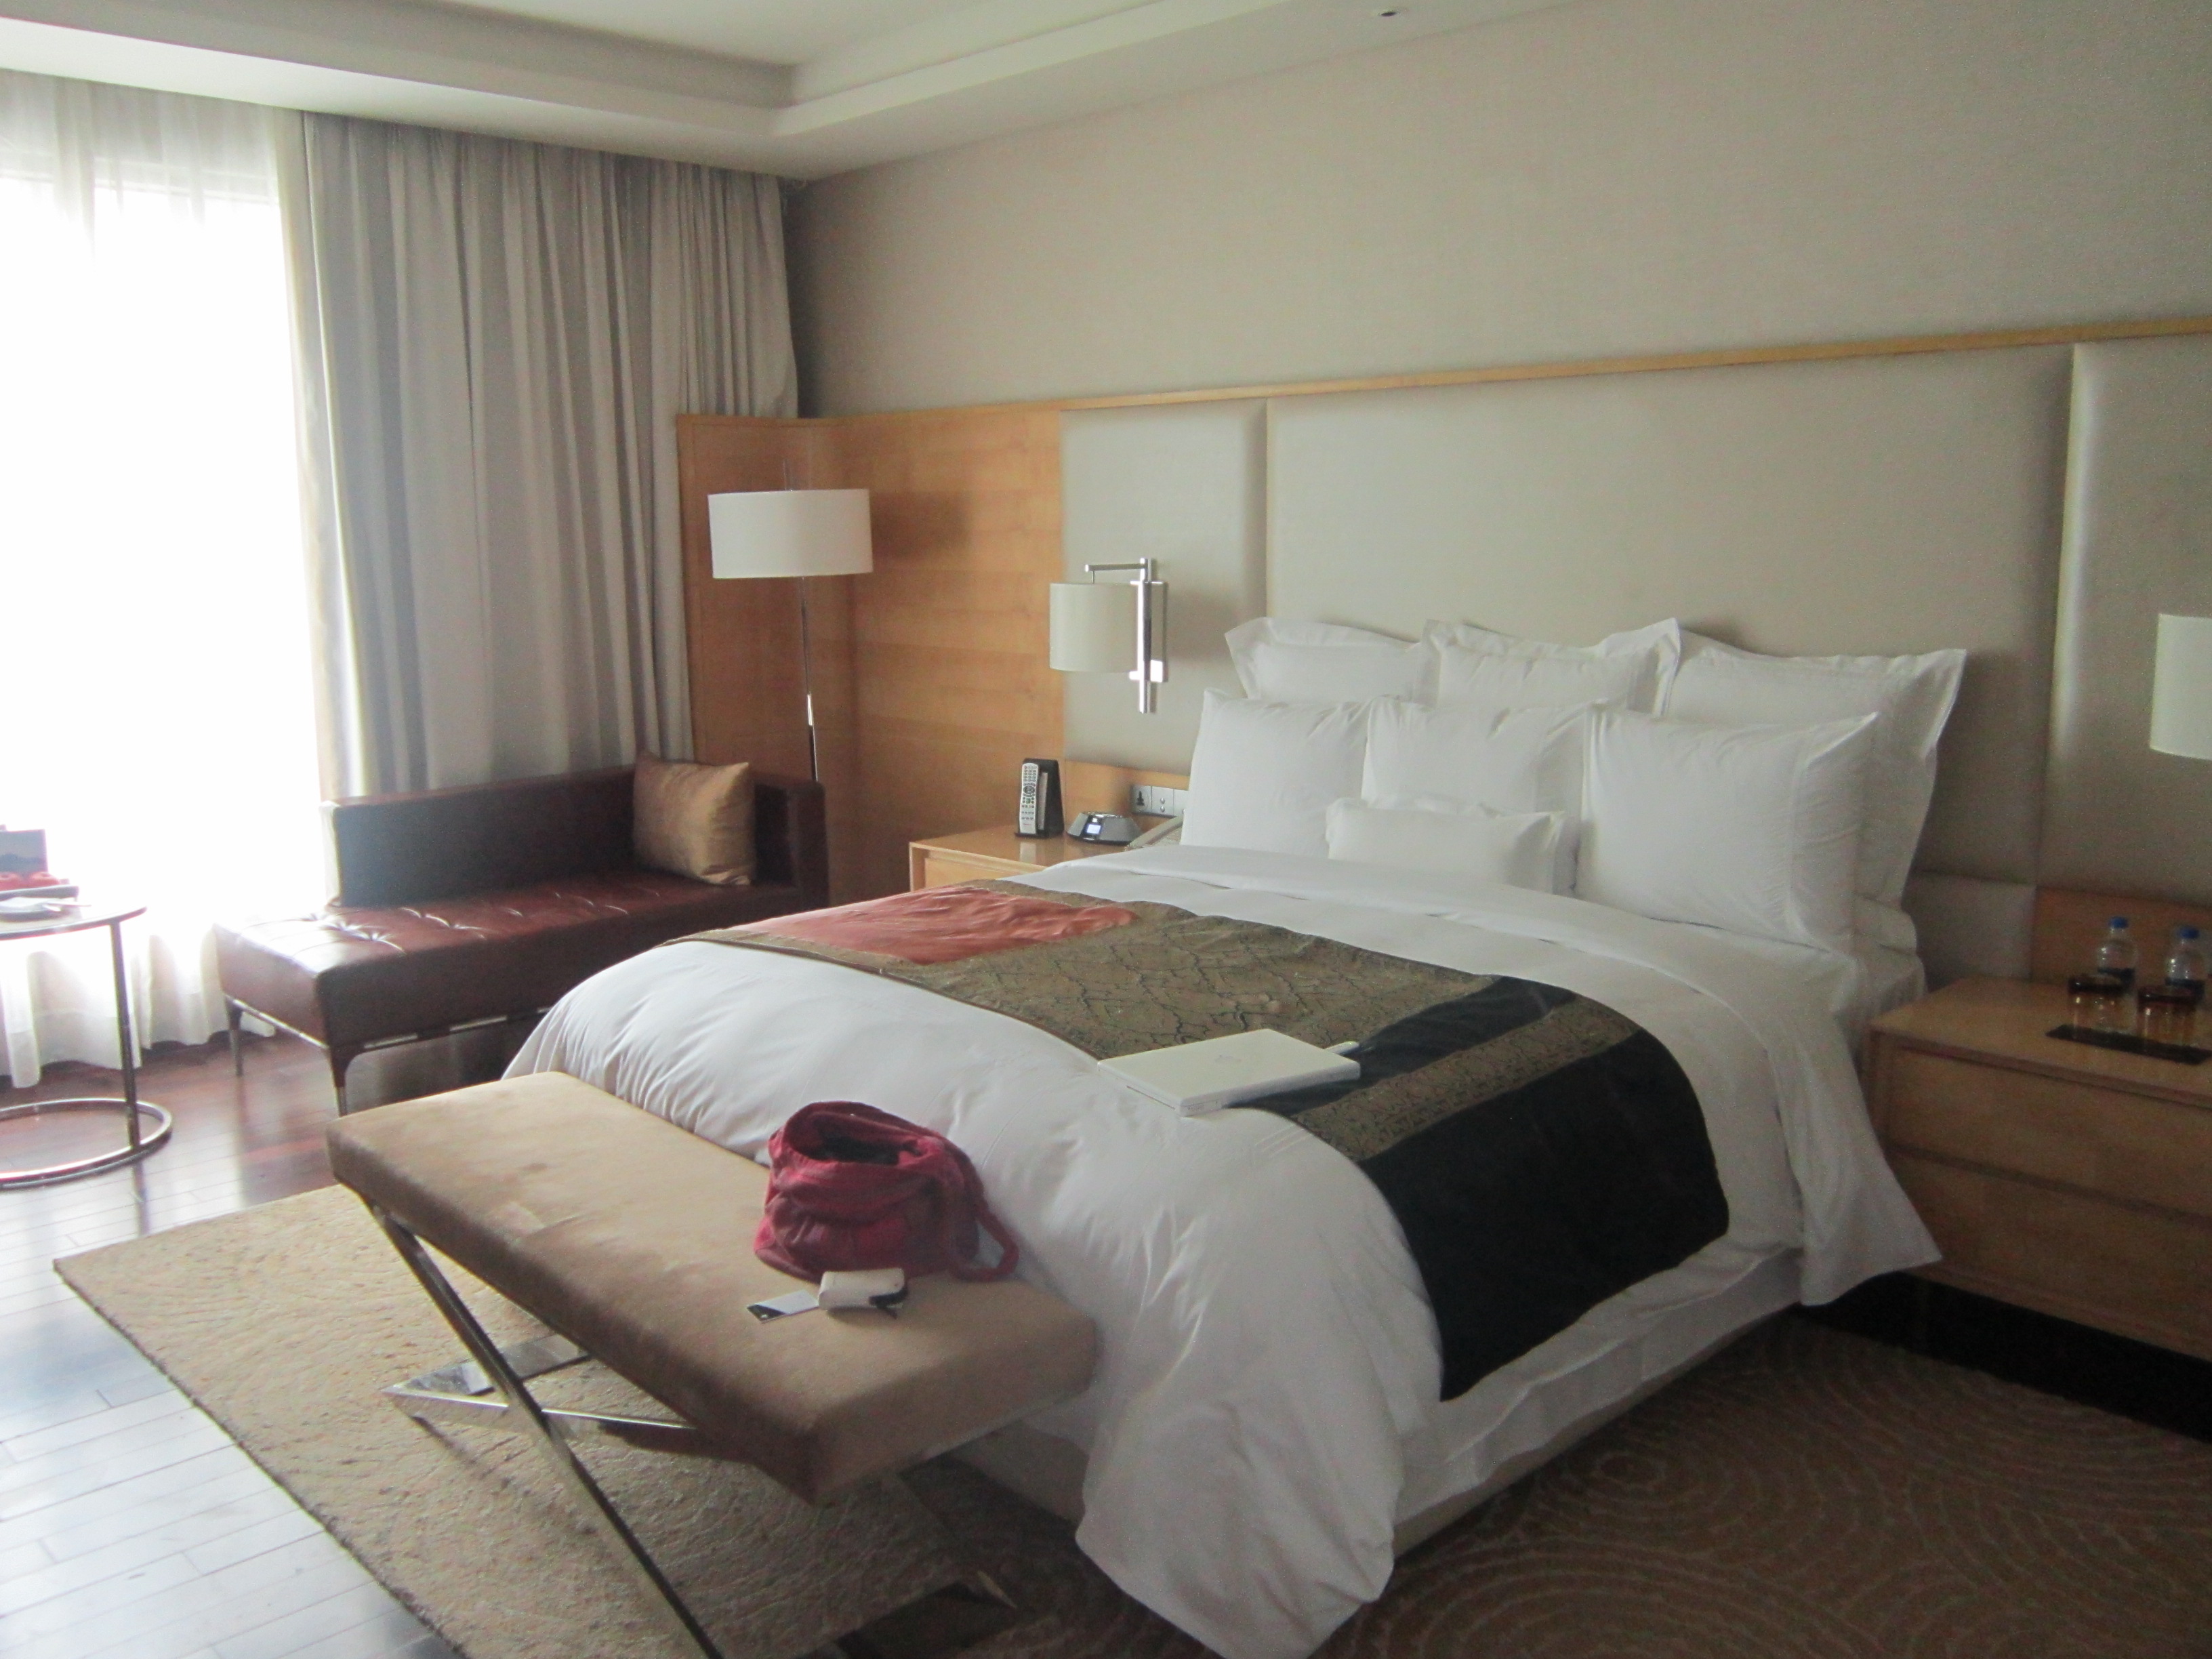 Chandigarh India JW Marriott hotel room